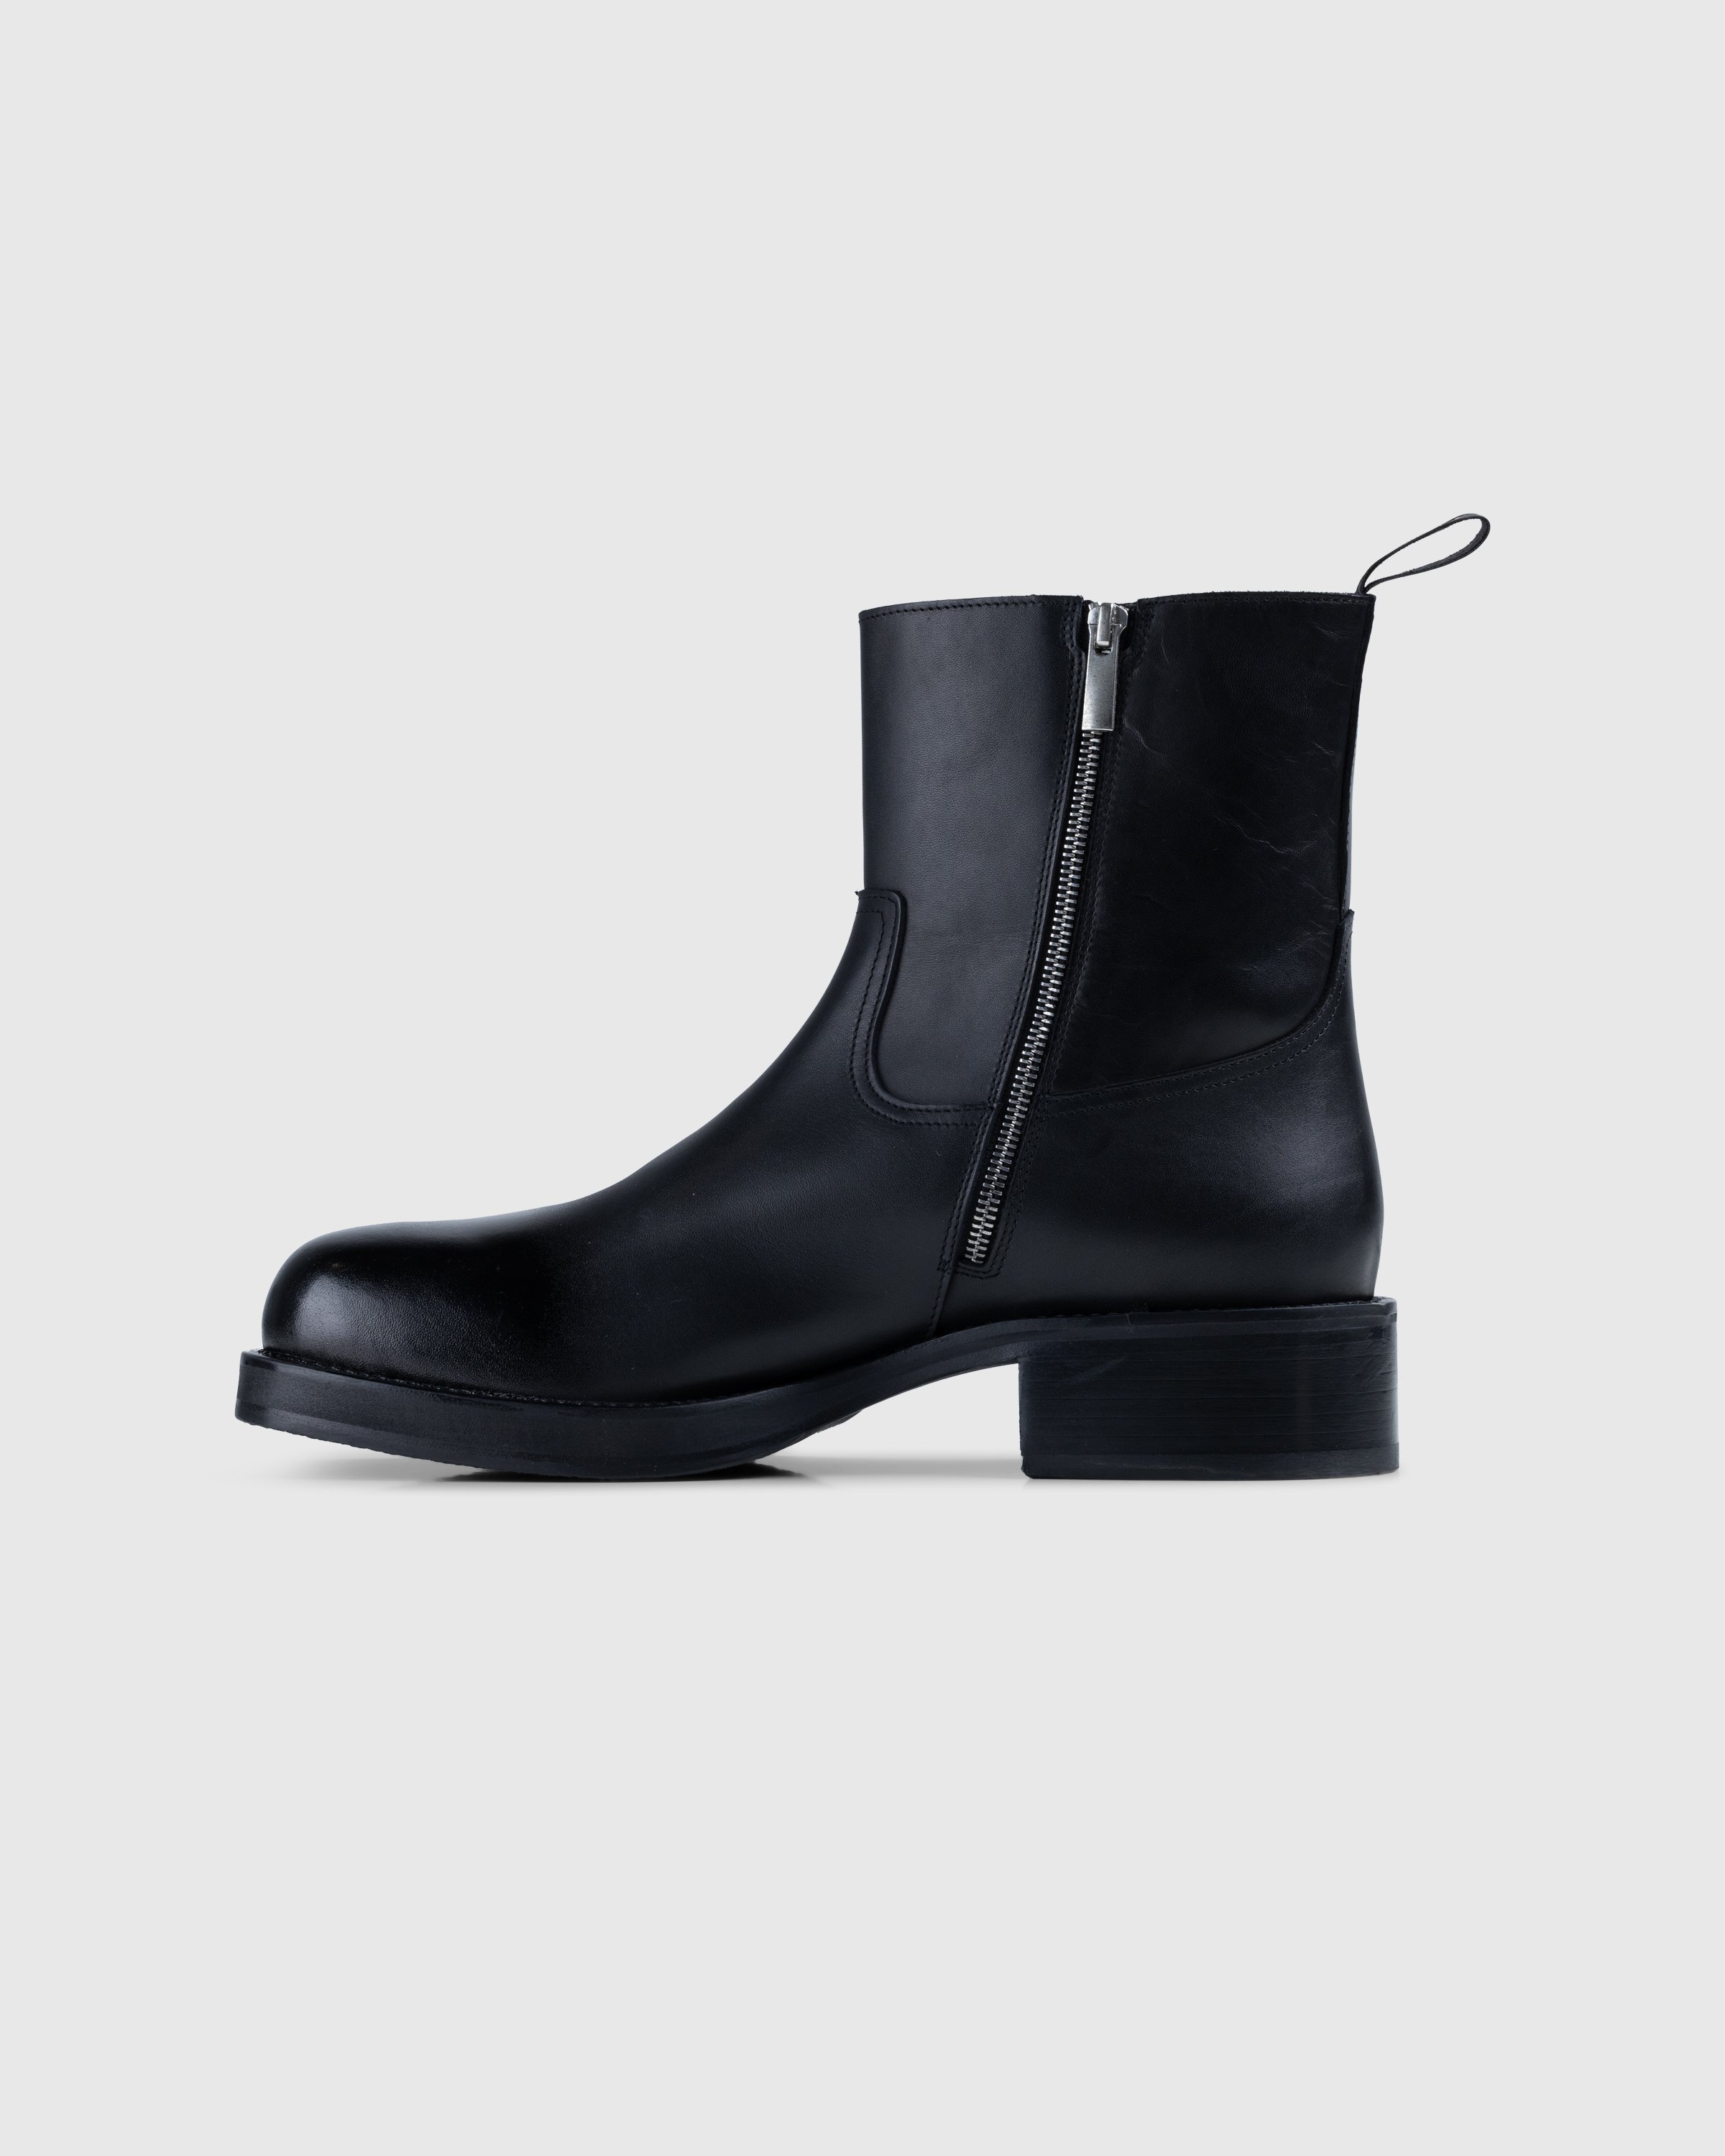 Acne Studios - Sprayed Leather Ankle Boots Black - Footwear - Black - Image 2